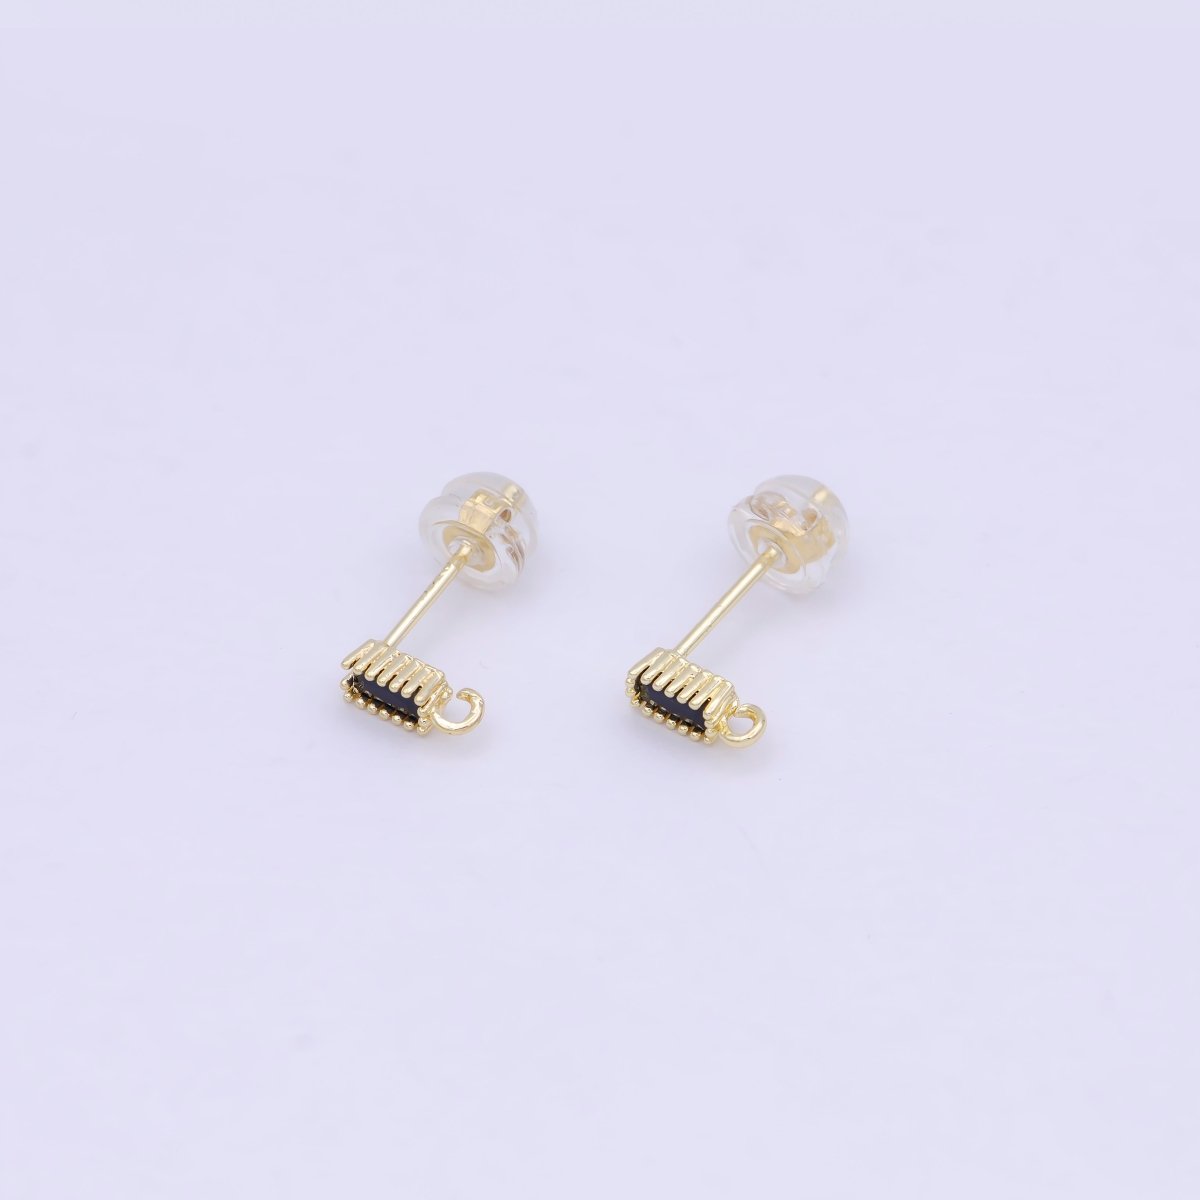 Minimalistic Black CZ Stud Chain Link Earrings, Small Stud Earrings, black Cz Earrings, Dainty Open Link Stud K-053 - DLUXCA